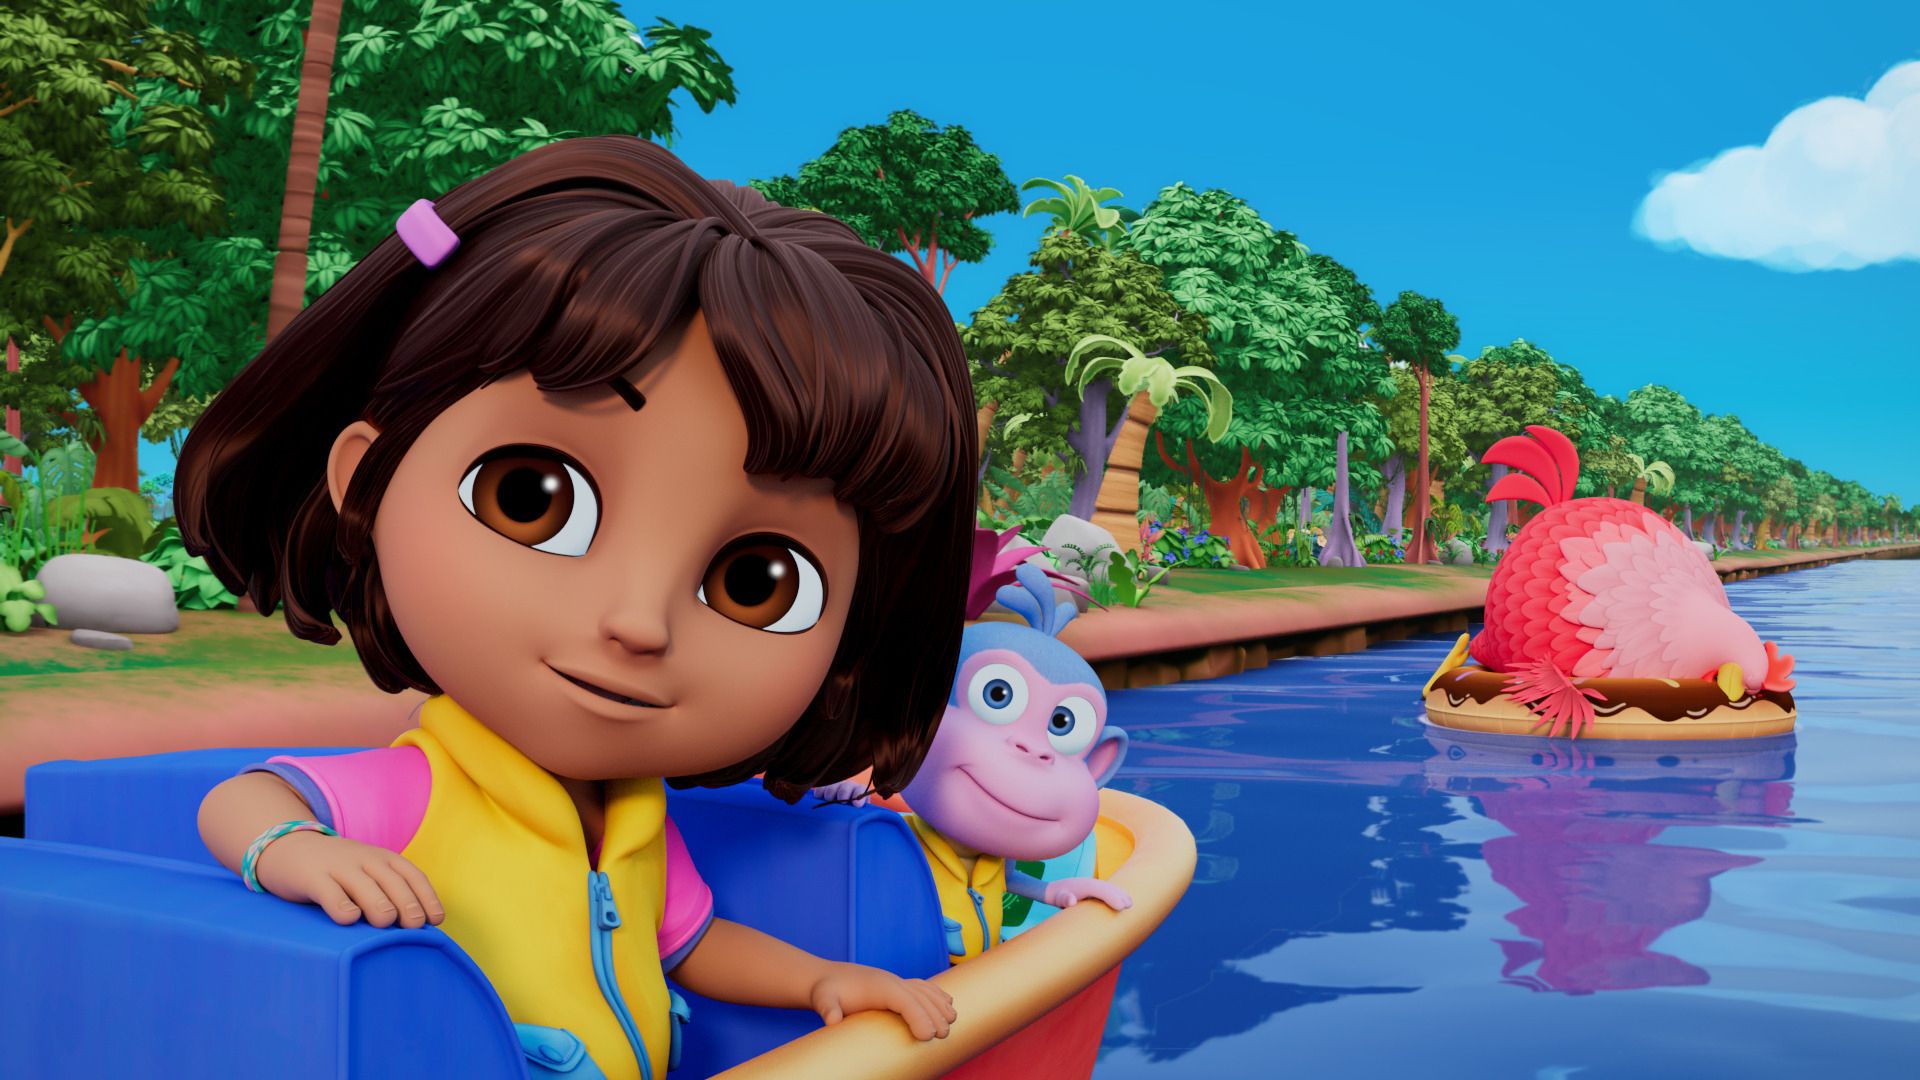 Le retour de Dora confirmé!